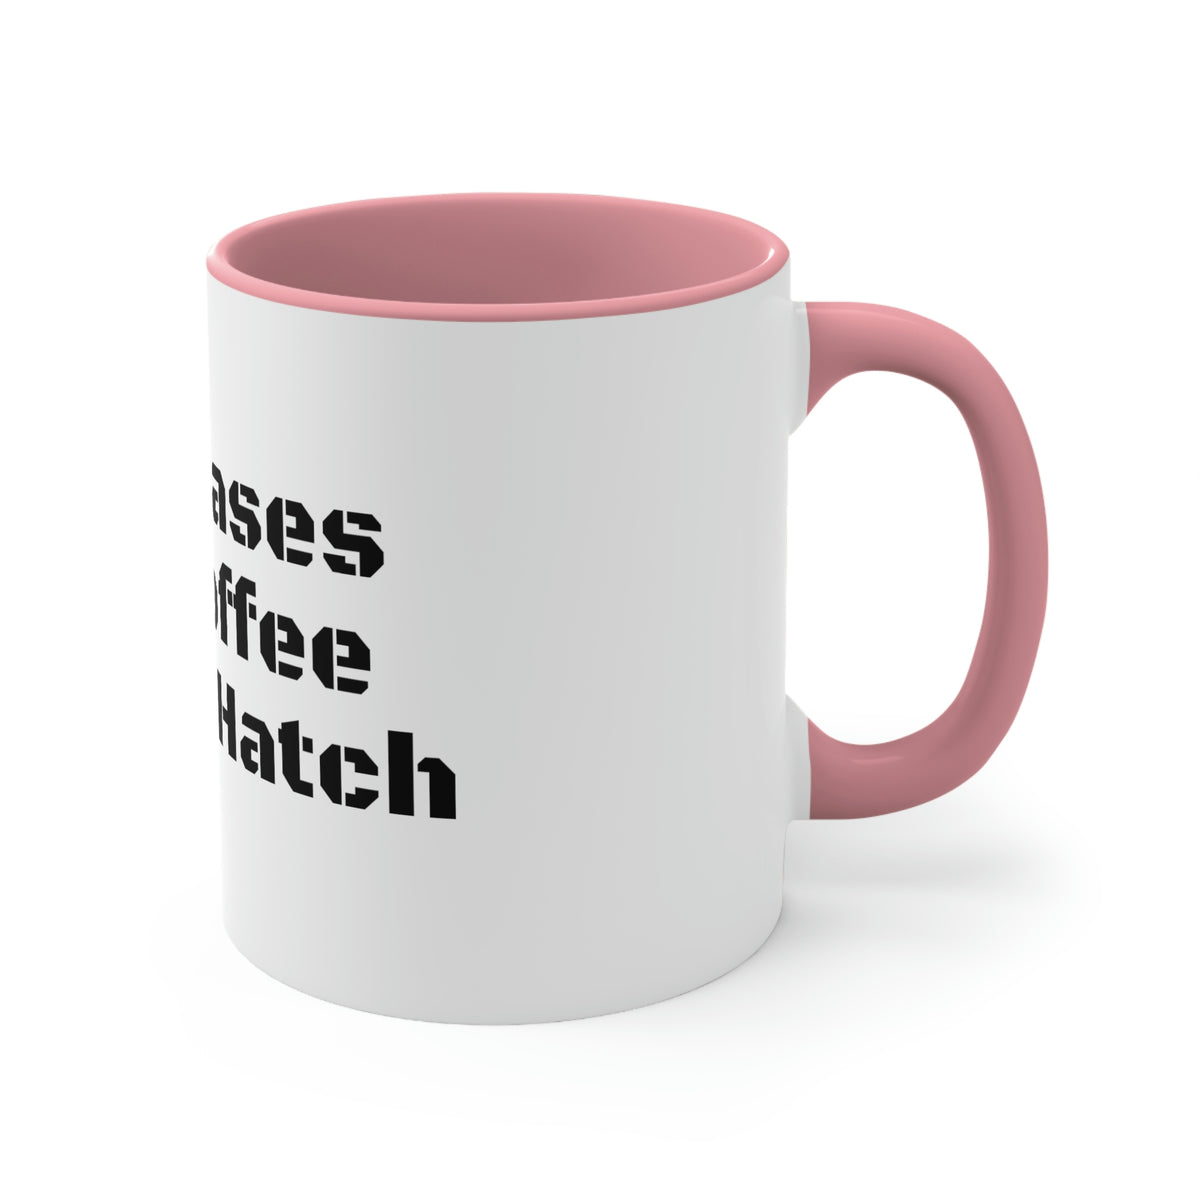 Cold Cases, Hot Coffee Rachel Hatch